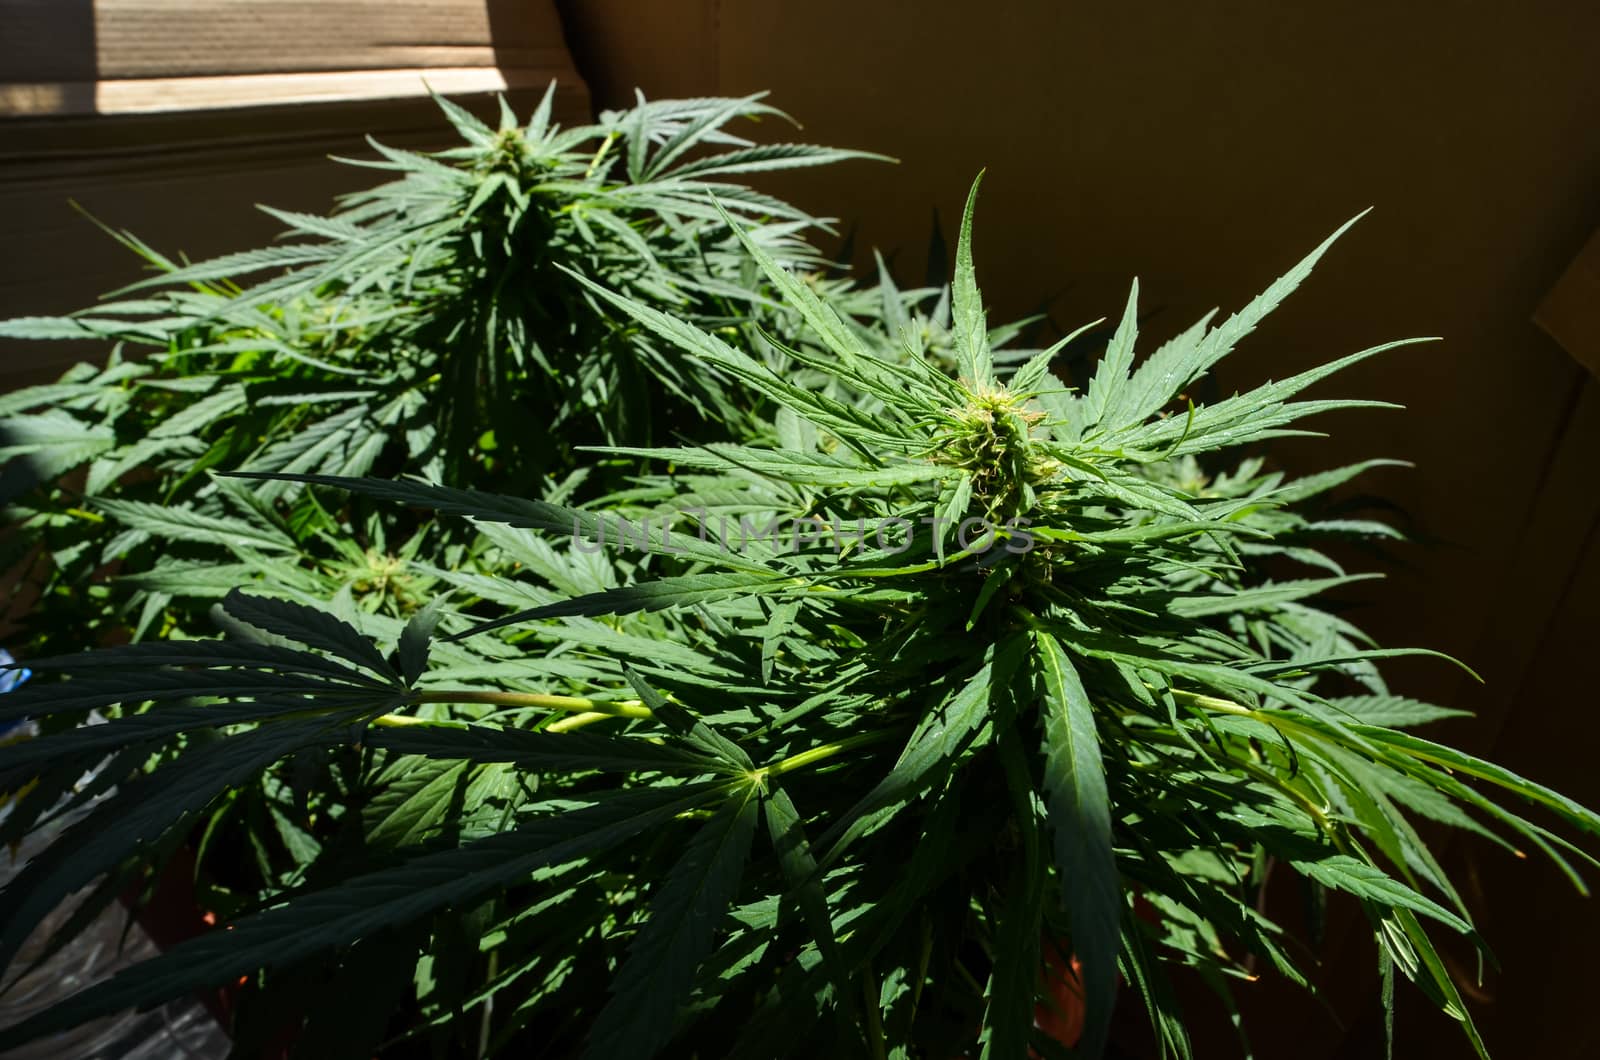 Blooming Cannabis Marijuana Green Buds mature Flowers